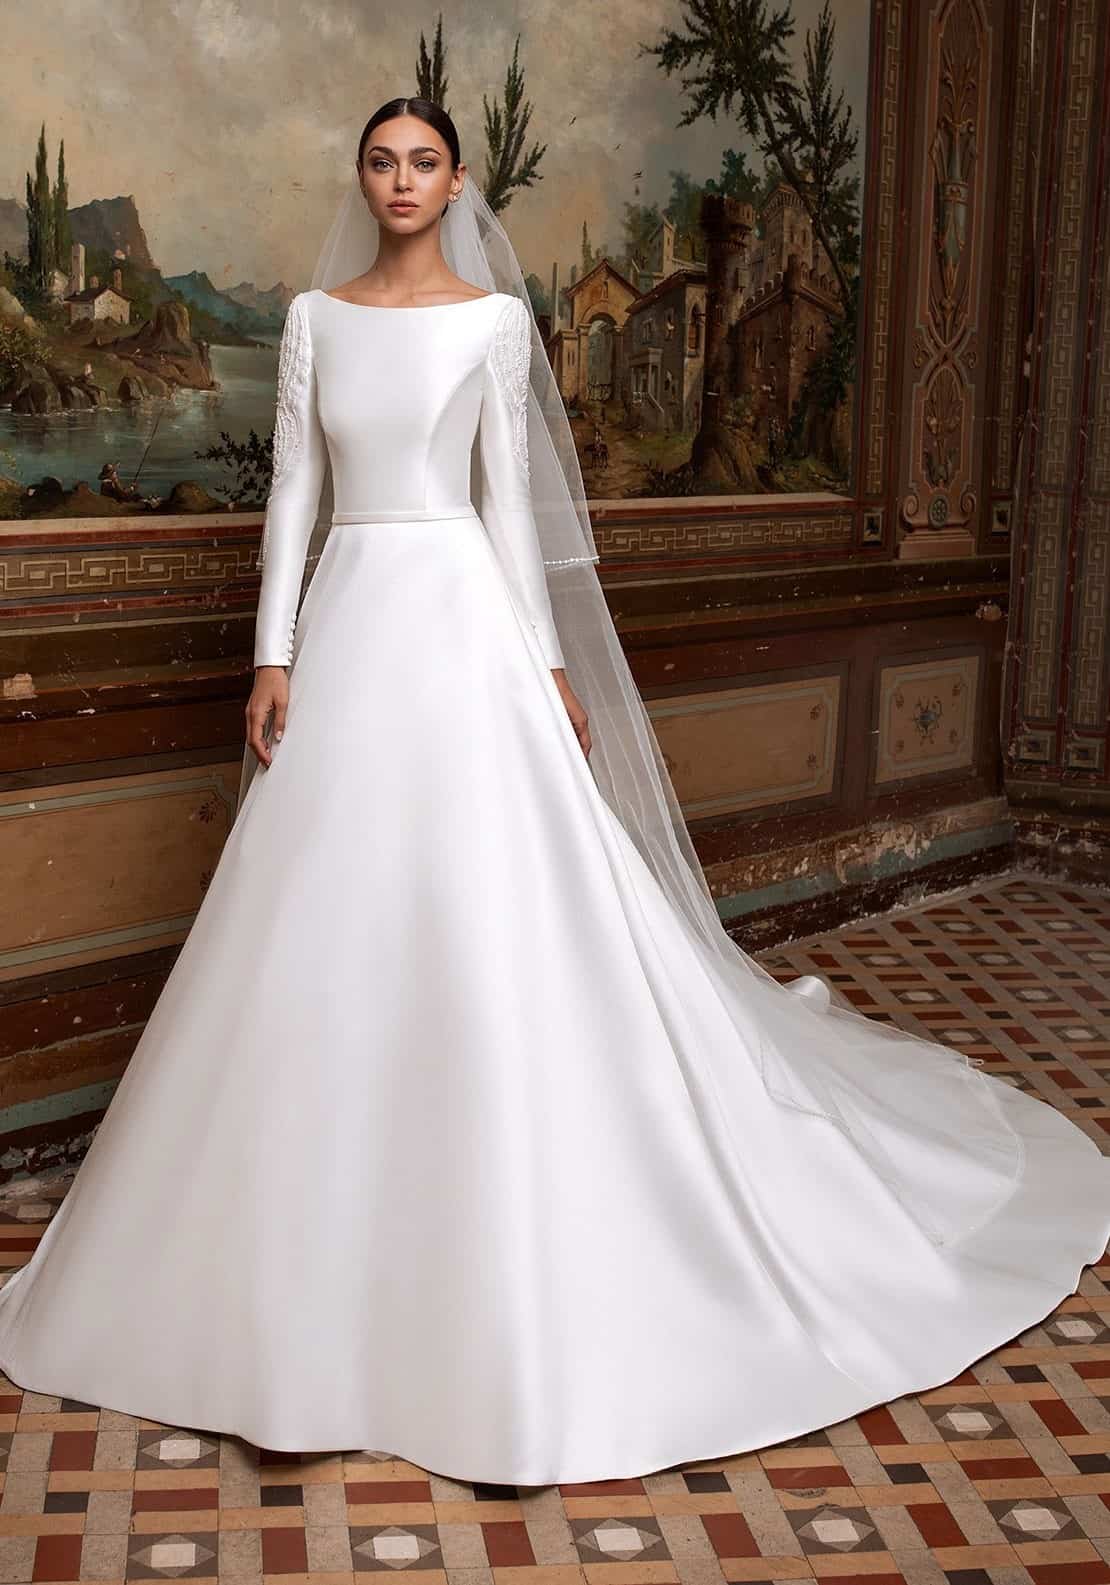 Unenäo tõlgendamine abielunaise valgest kleidist